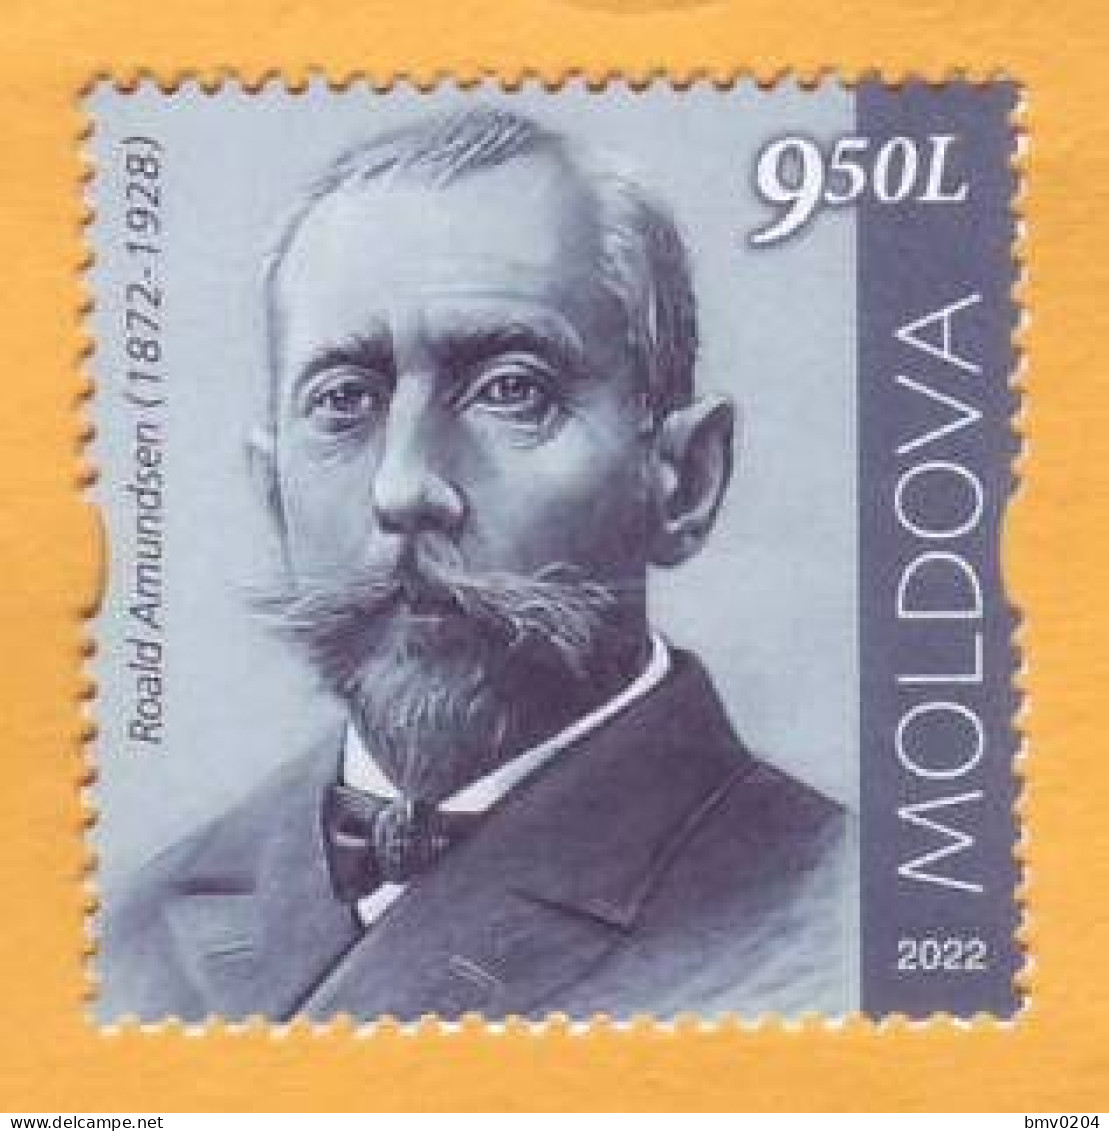 2022  Moldova Personalities Who Changed The World History Roald Amundsen (1872-1928), Norvegian Explorer 1v Mint - Moldova